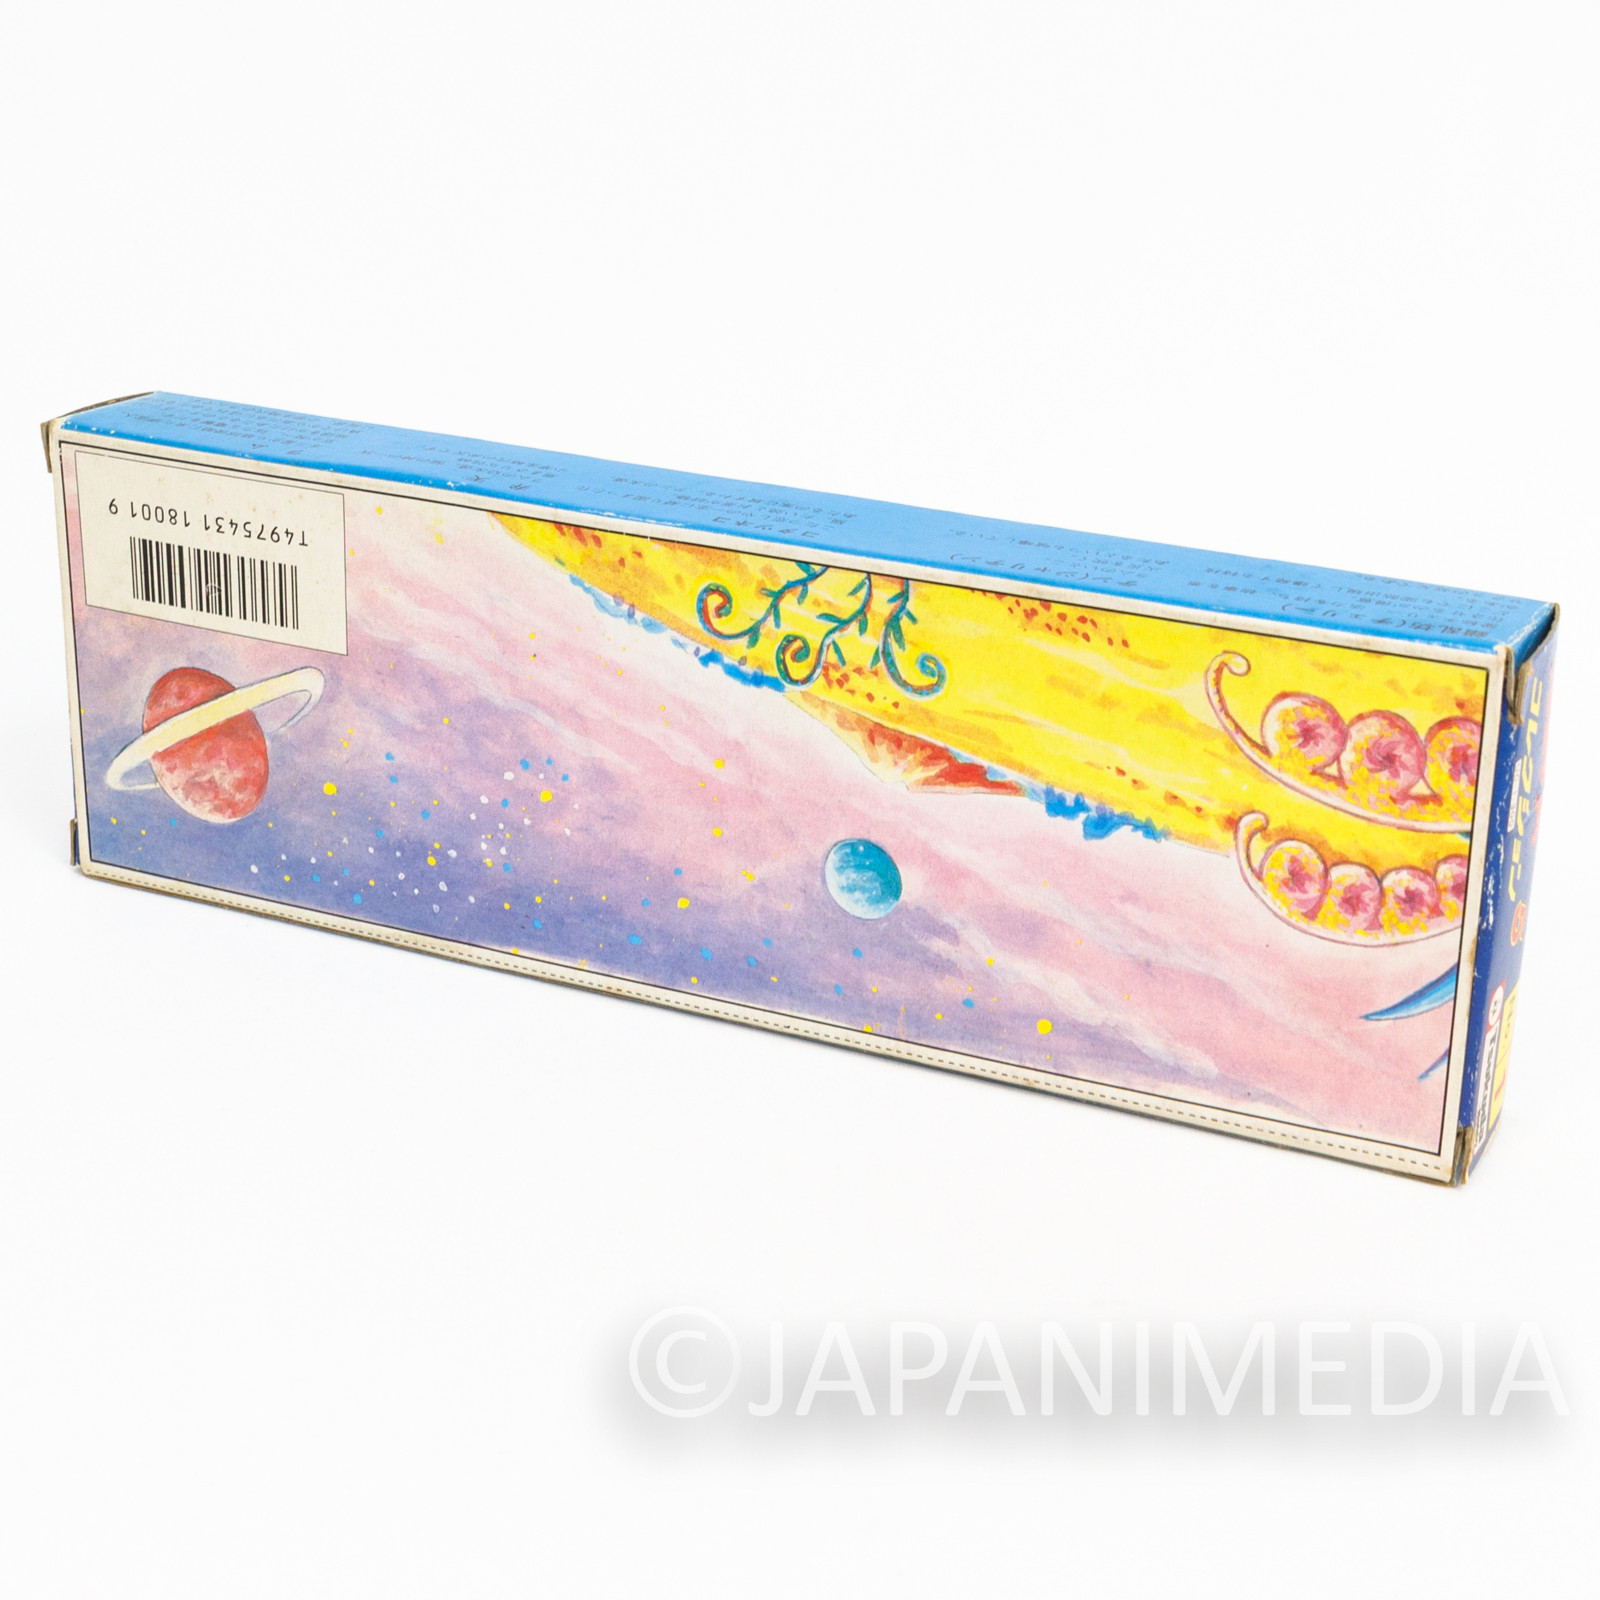 Urusei Yatsura Collection 5pc Model Kit Tsukuda Hobby JAPAN ANIME MANGA 2